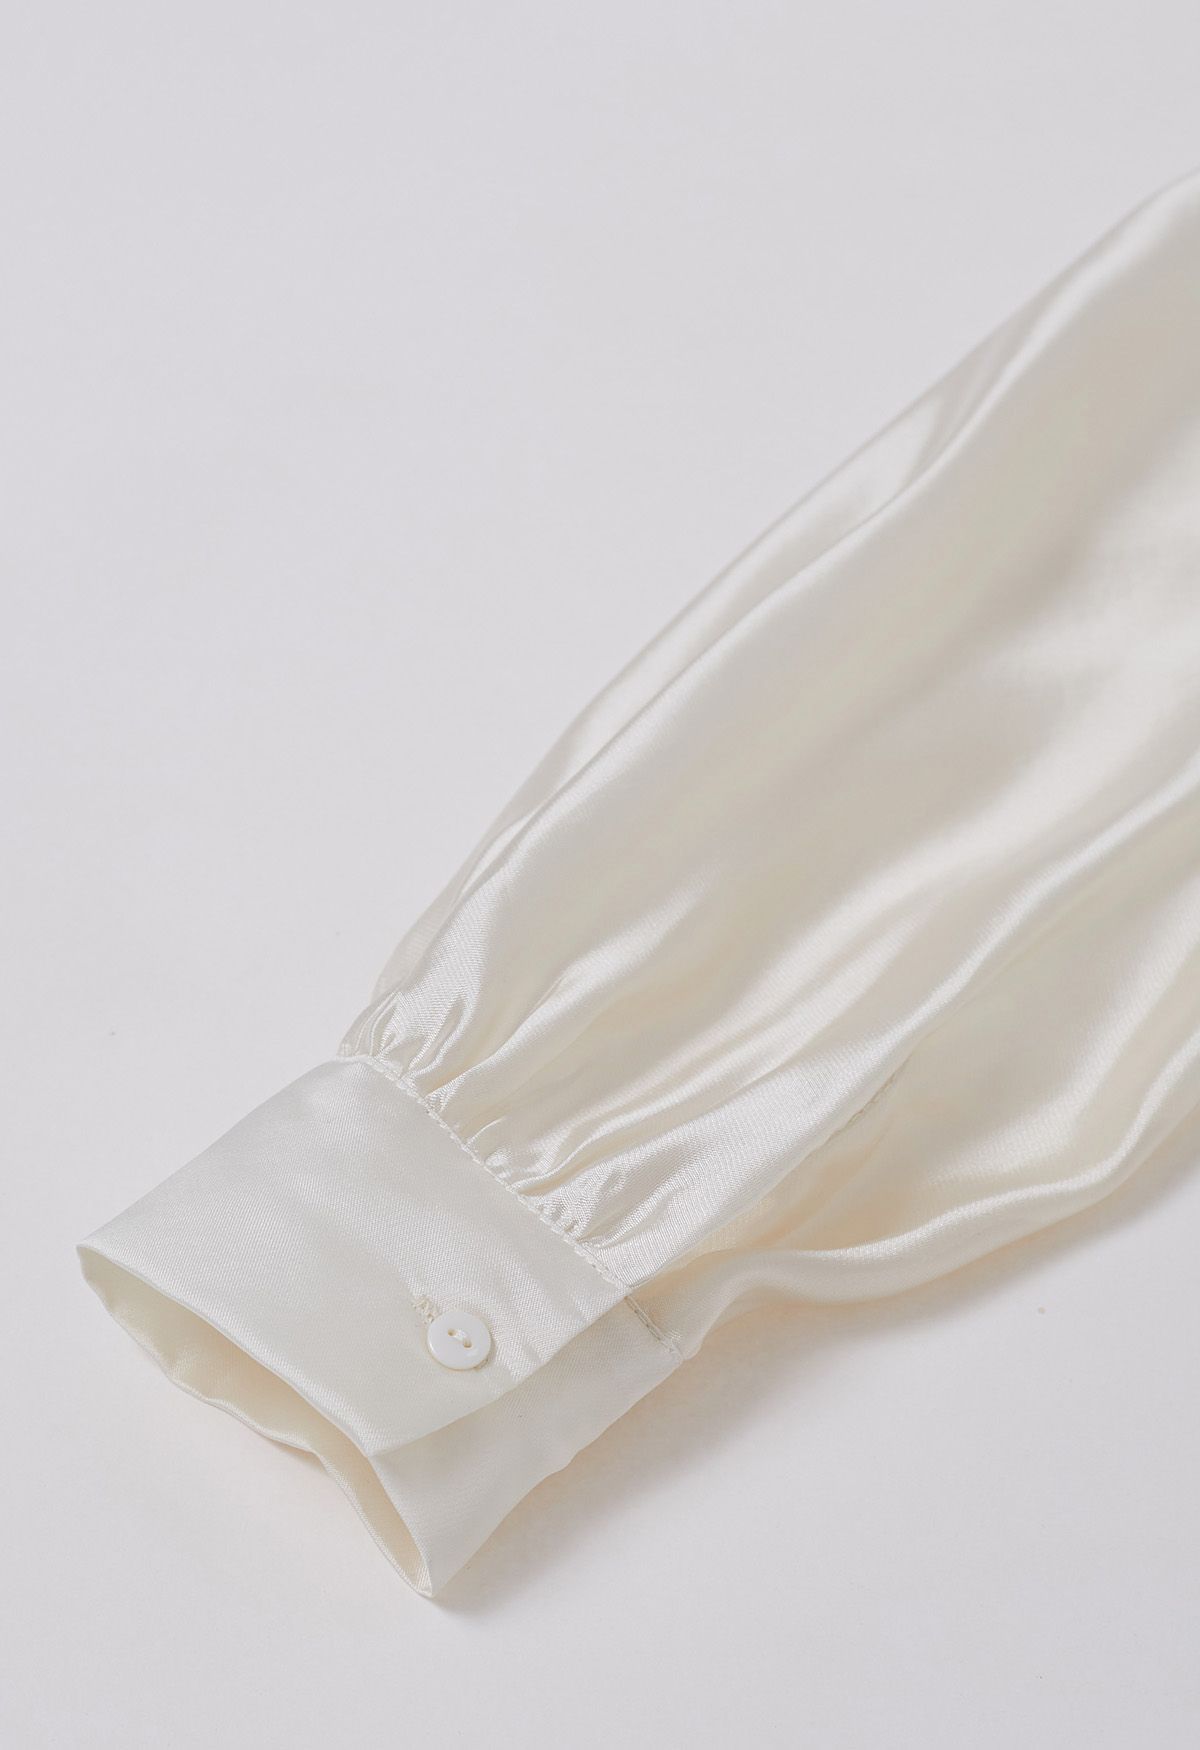 Elegant Bowknot Puff Sleeves Sheer Shirt in Cream